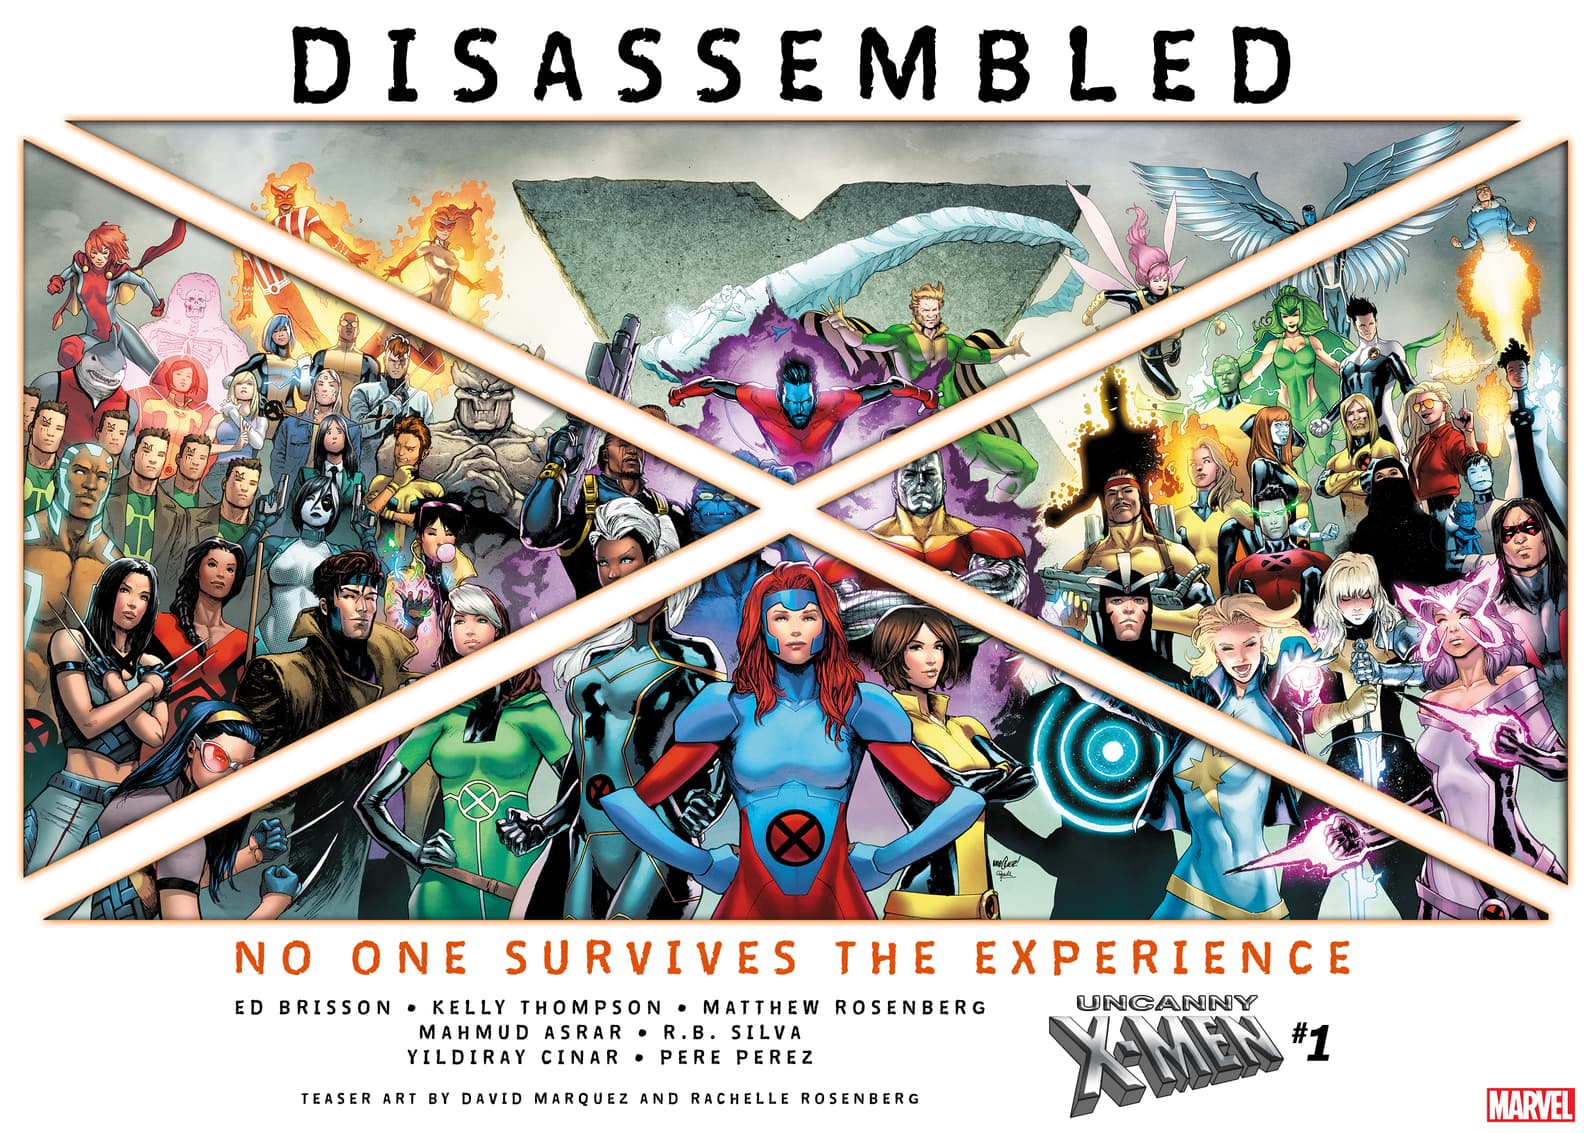 Cover of Uncanny X-Men